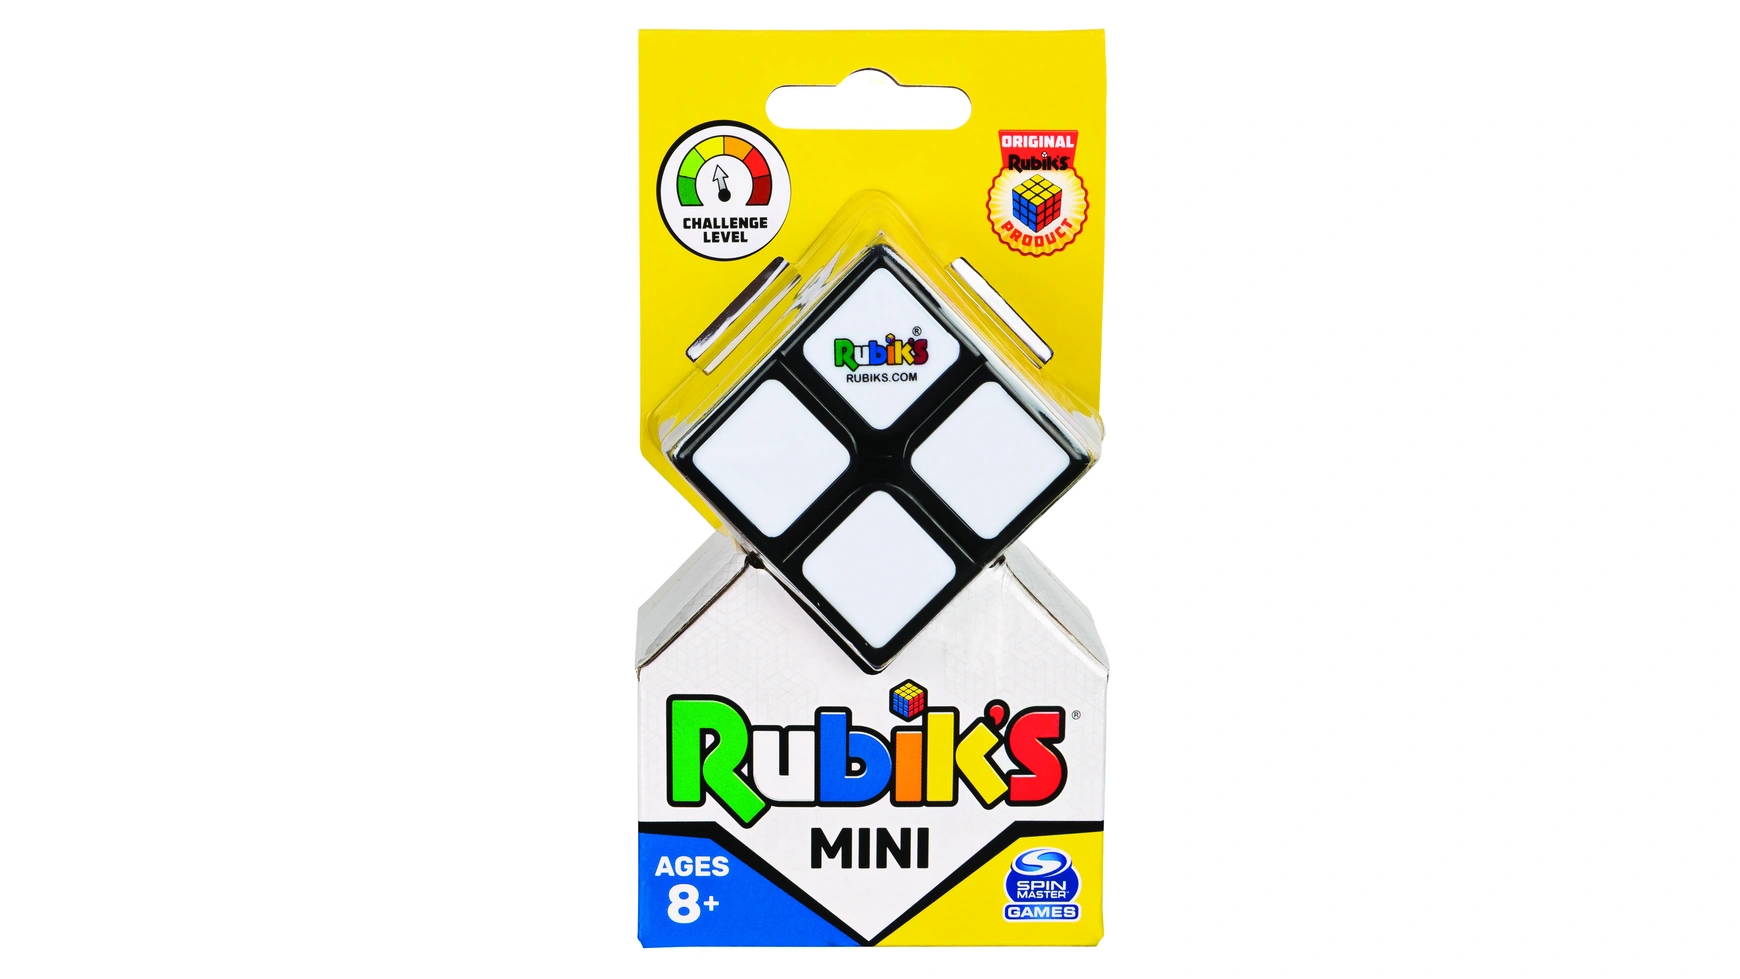 Rubik's Mini 2x2 Кубик Рубика кубик 2x2 для начинающих от 8 лет и для путешествий Spin Master лаборатория игр кубик рубика 4х4 без наклеек кр5012